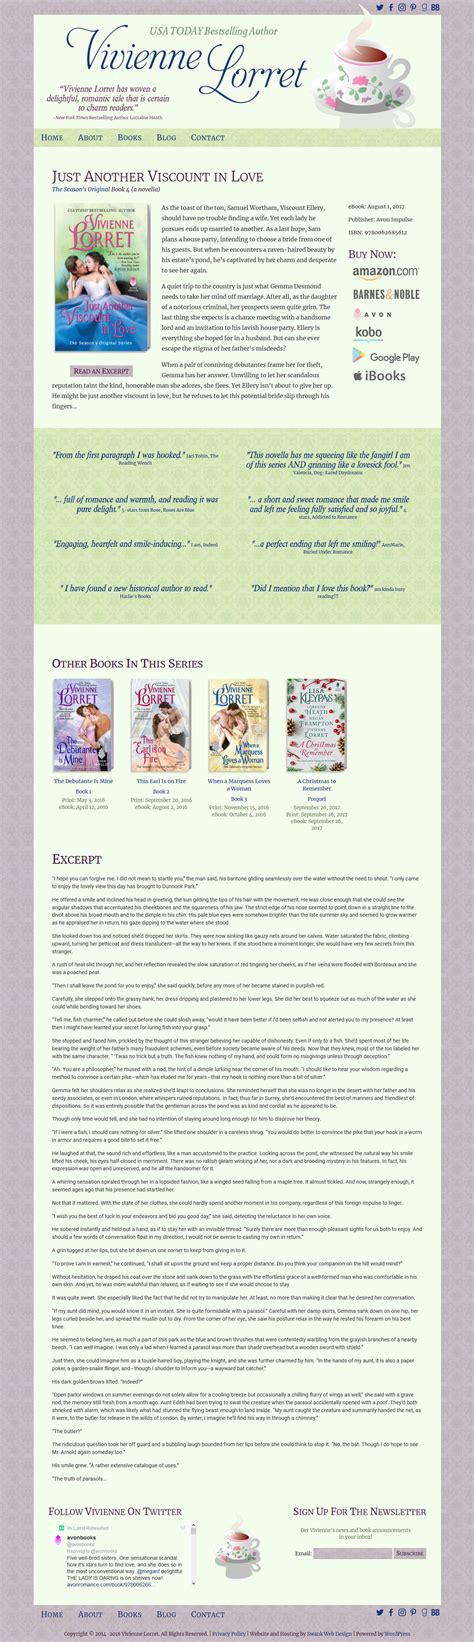 website design for romance author vivienne lorret swank